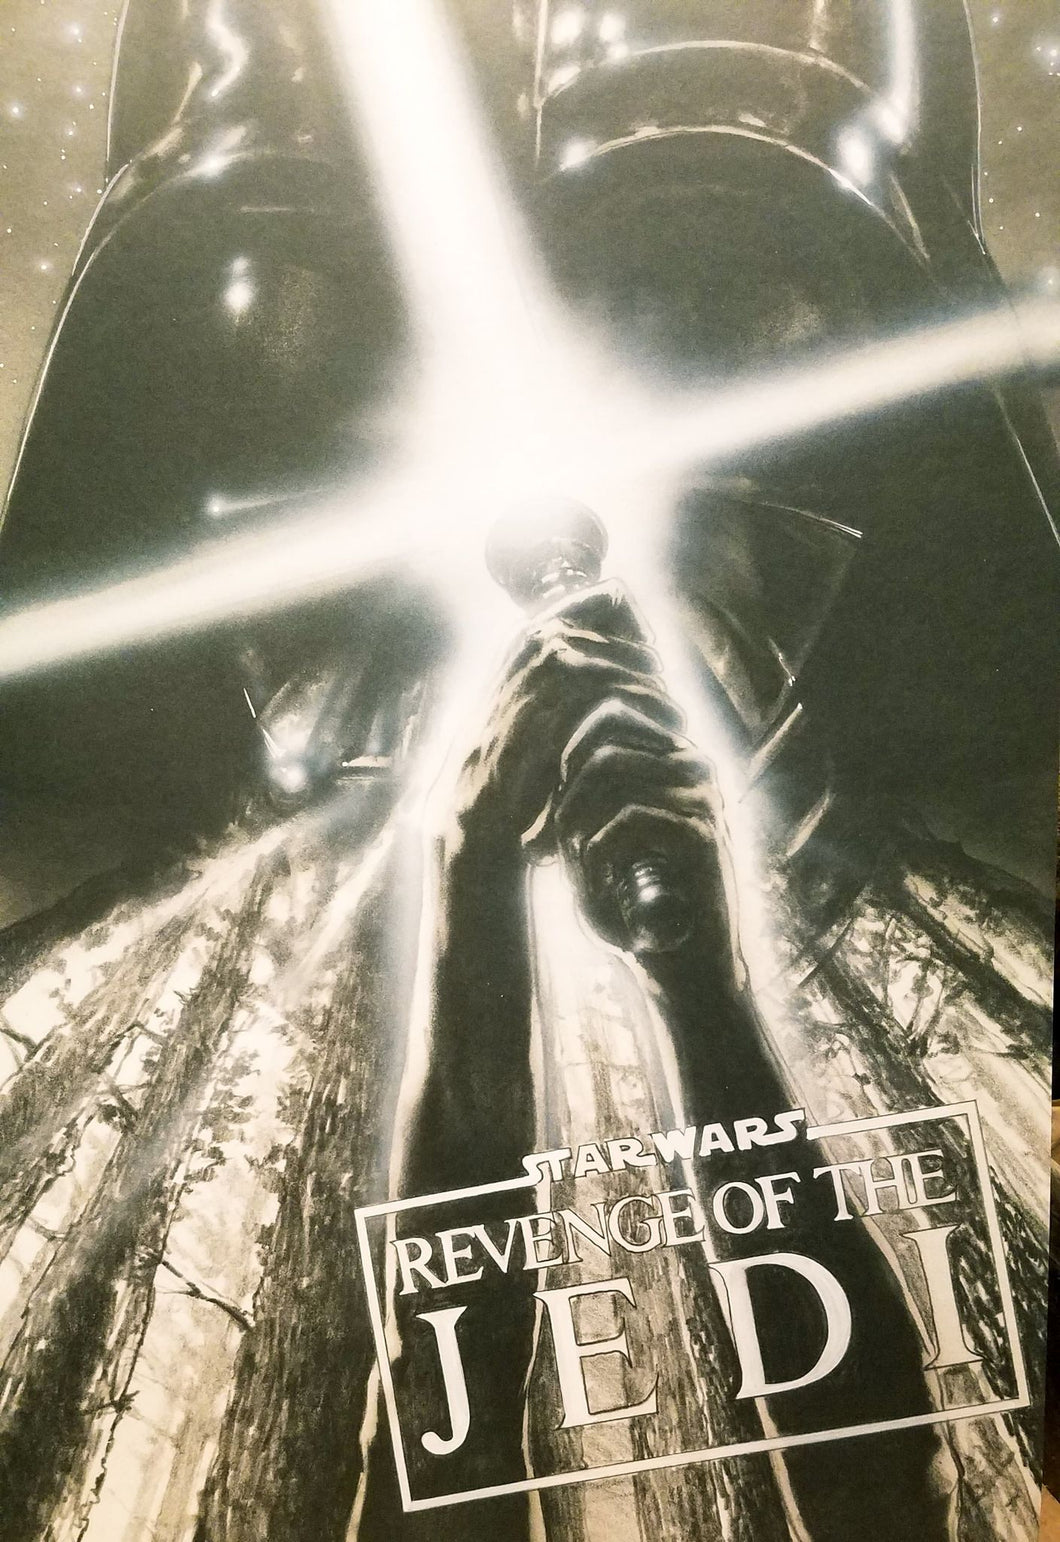 Star Wars Revenge of the Jedi 11x16 Movie Concept Art Poster Print by John Alvin, 1982